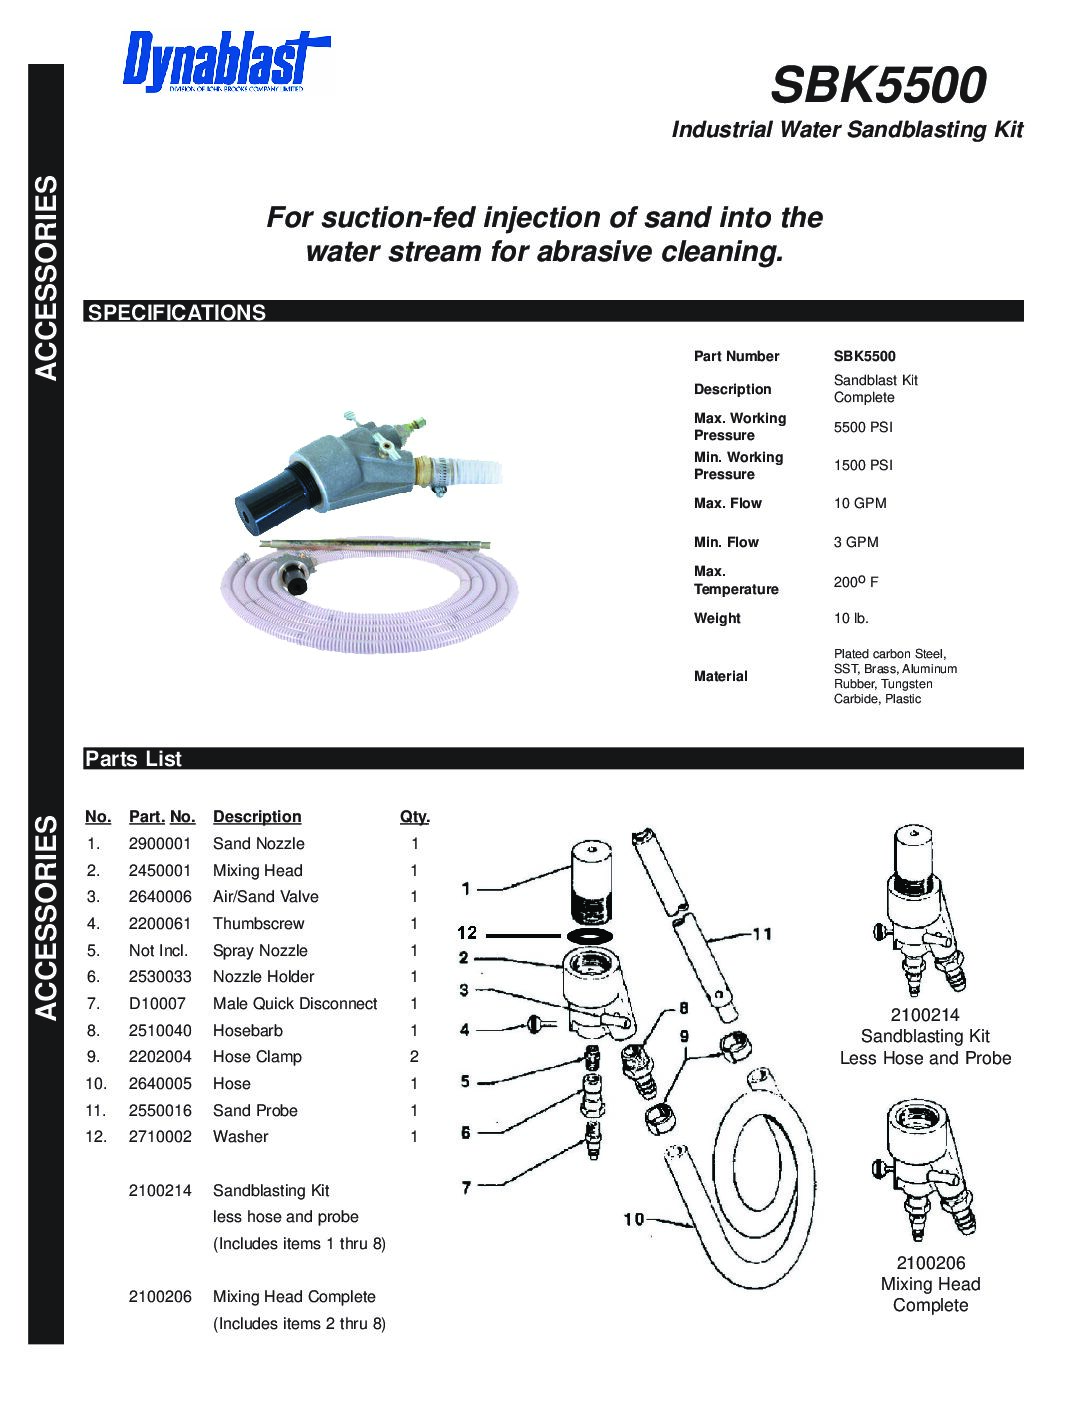 SBK5500 Sandblasting Kit details